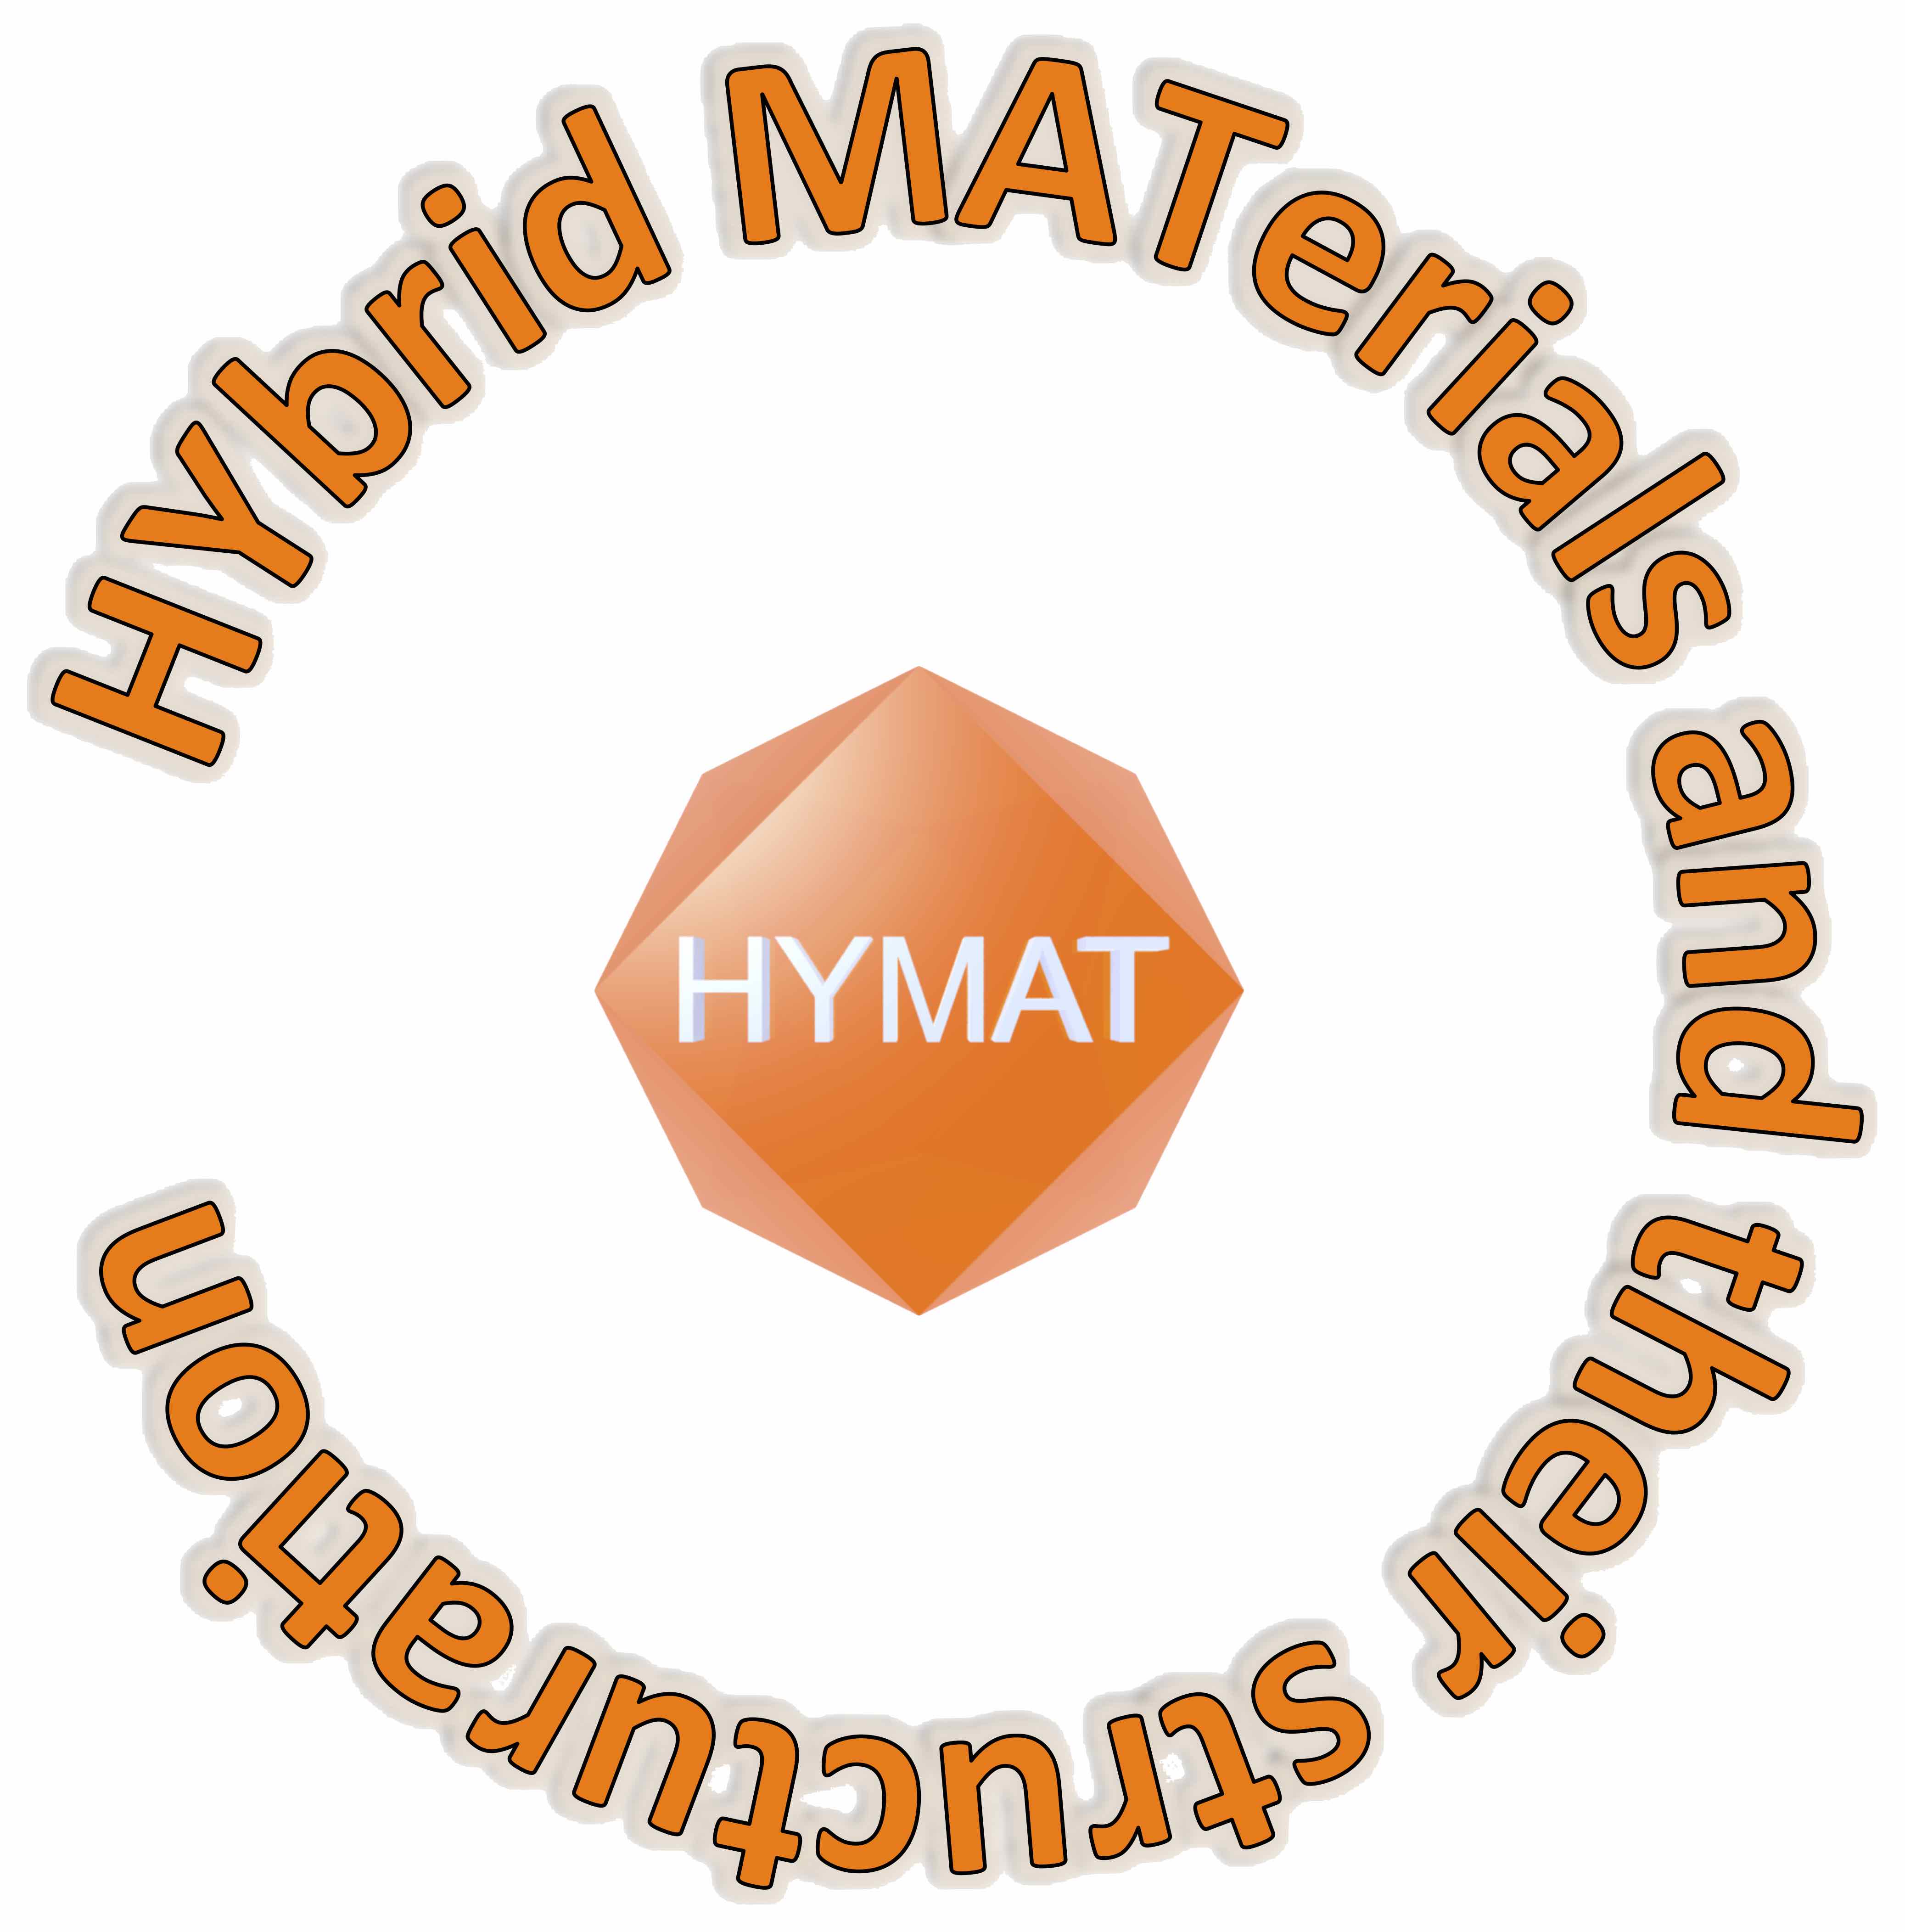 HYMAT group